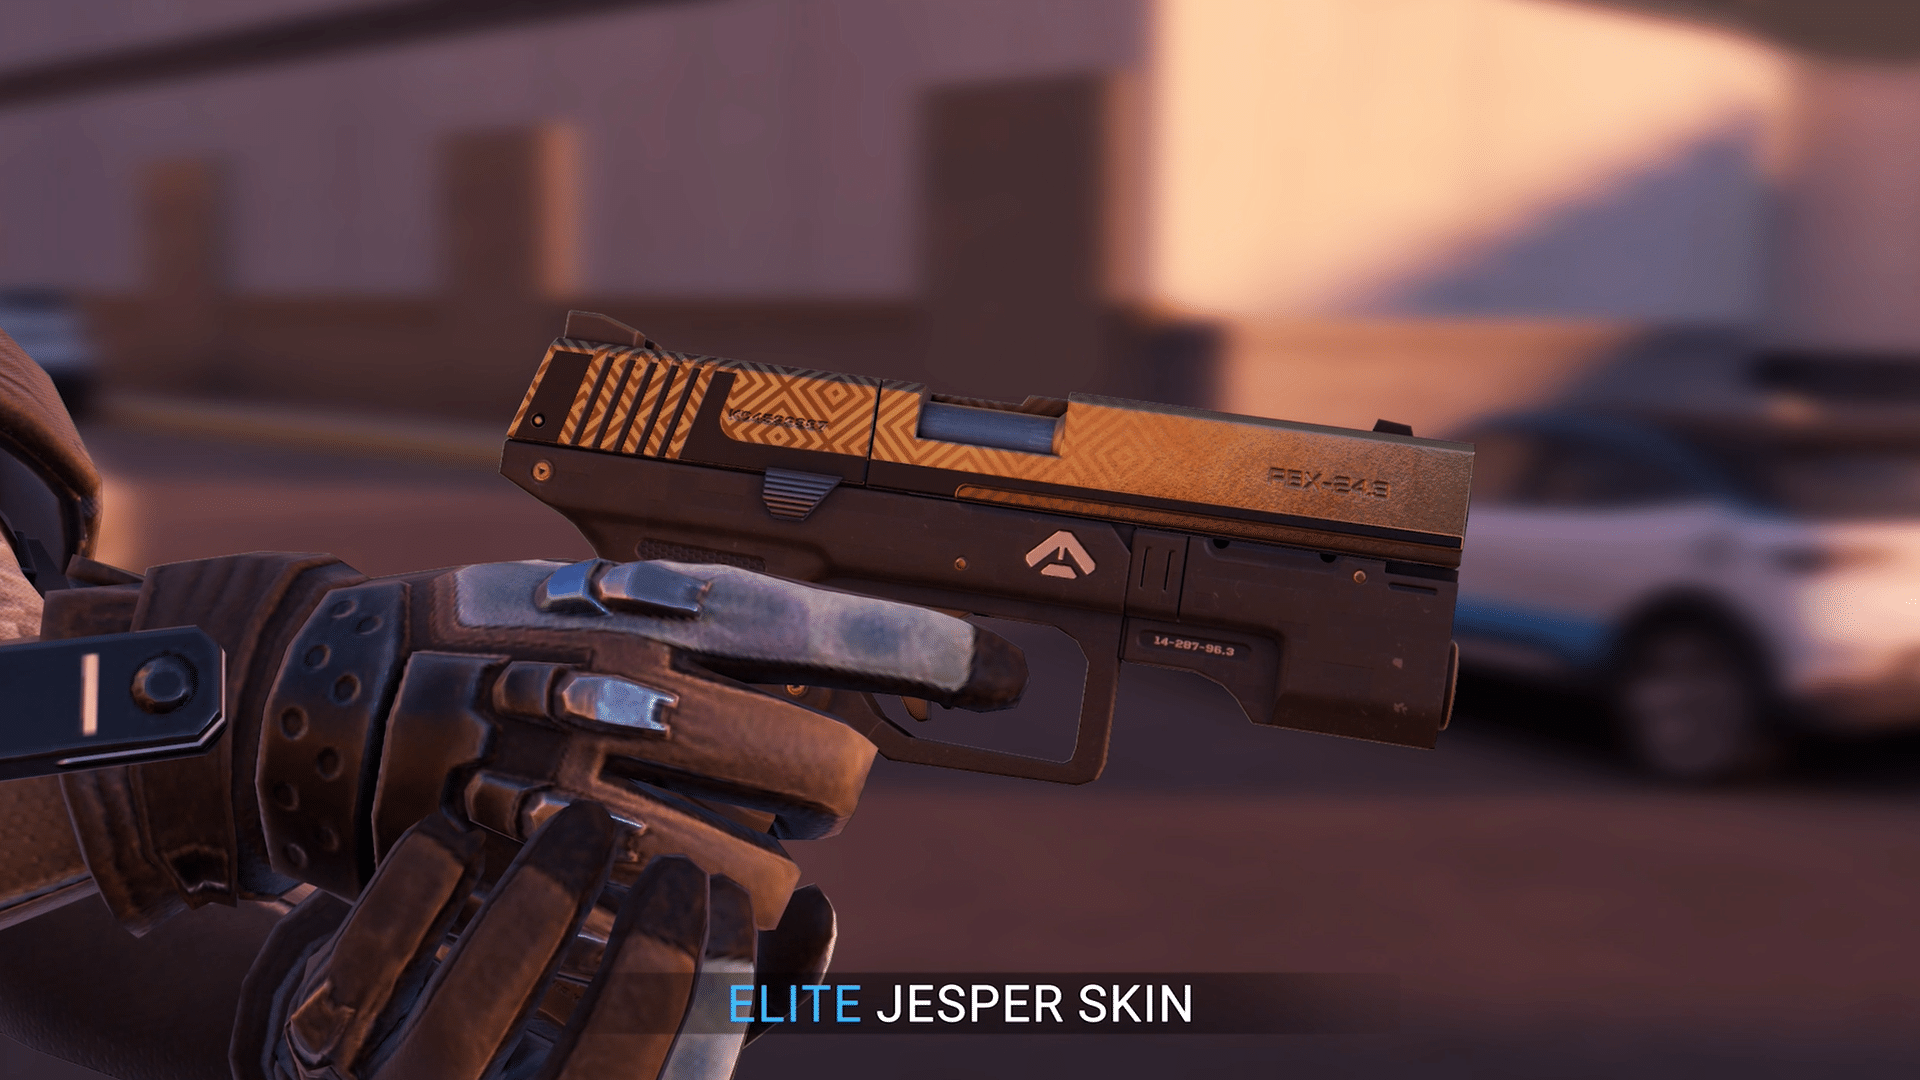 Breachers - Elite Jesper Skin